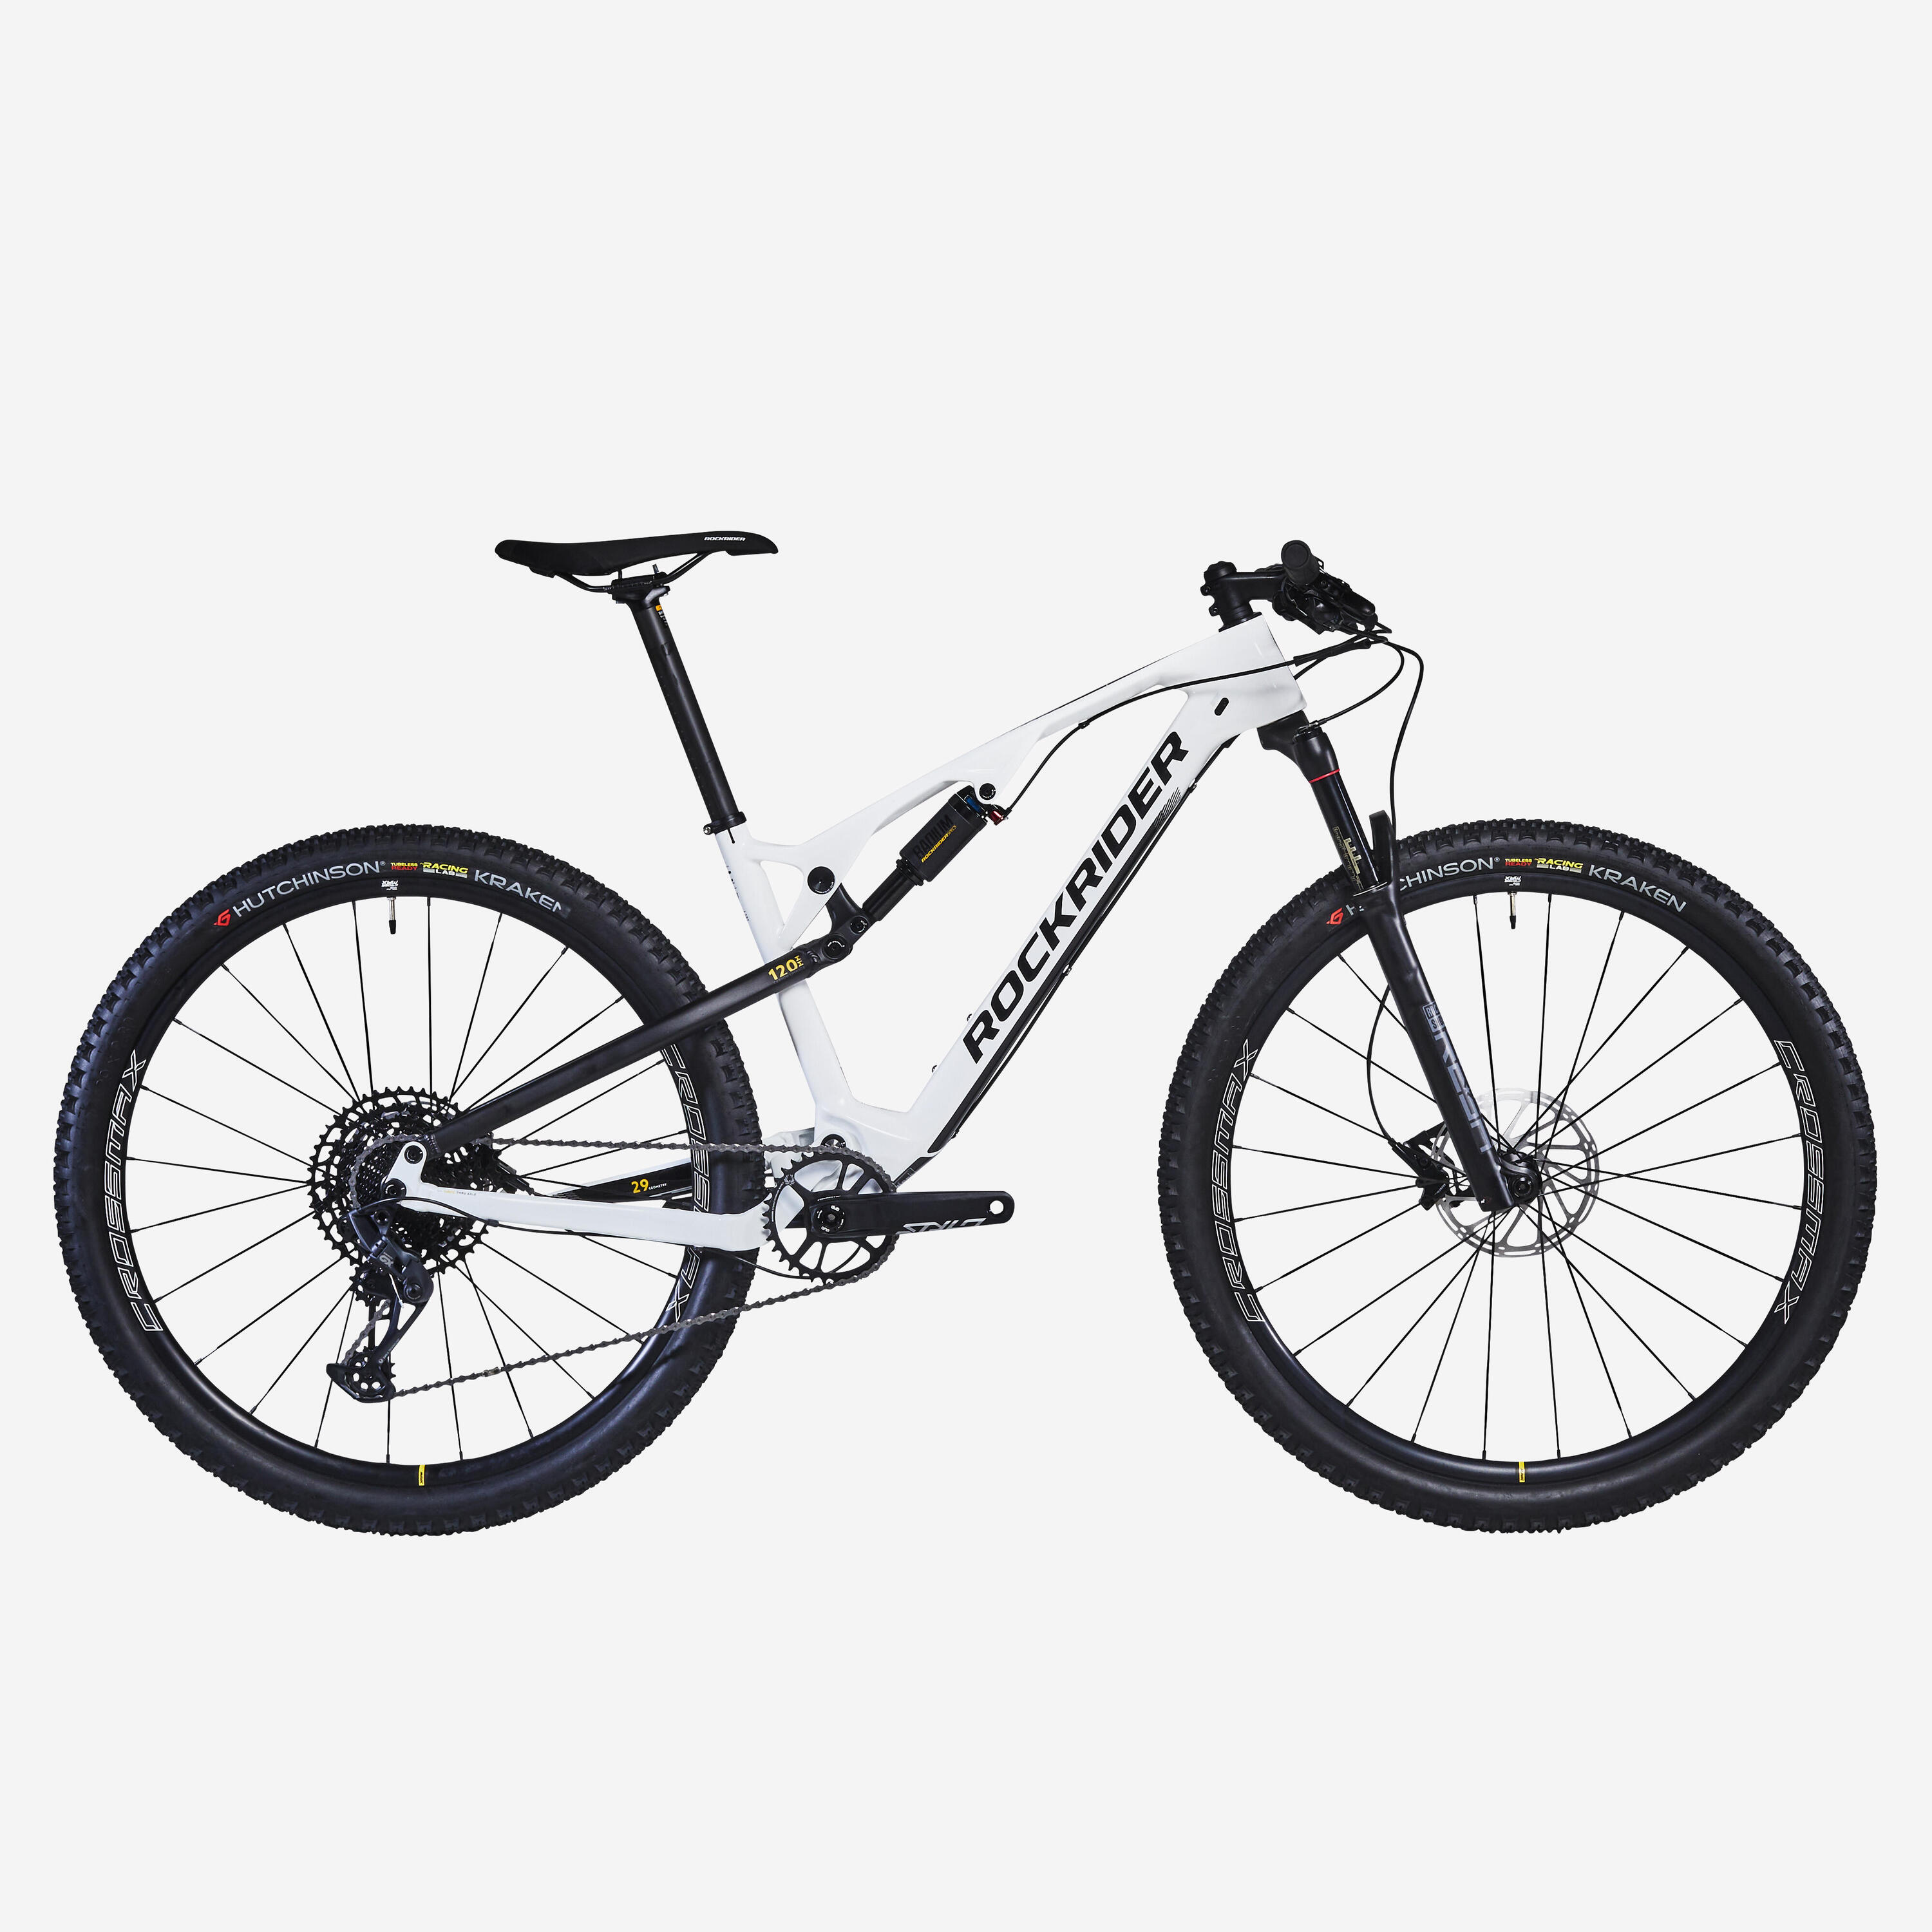 29 inch Full Suspension Carbon Mountain Bike rockrider XC 900 - white 1/13